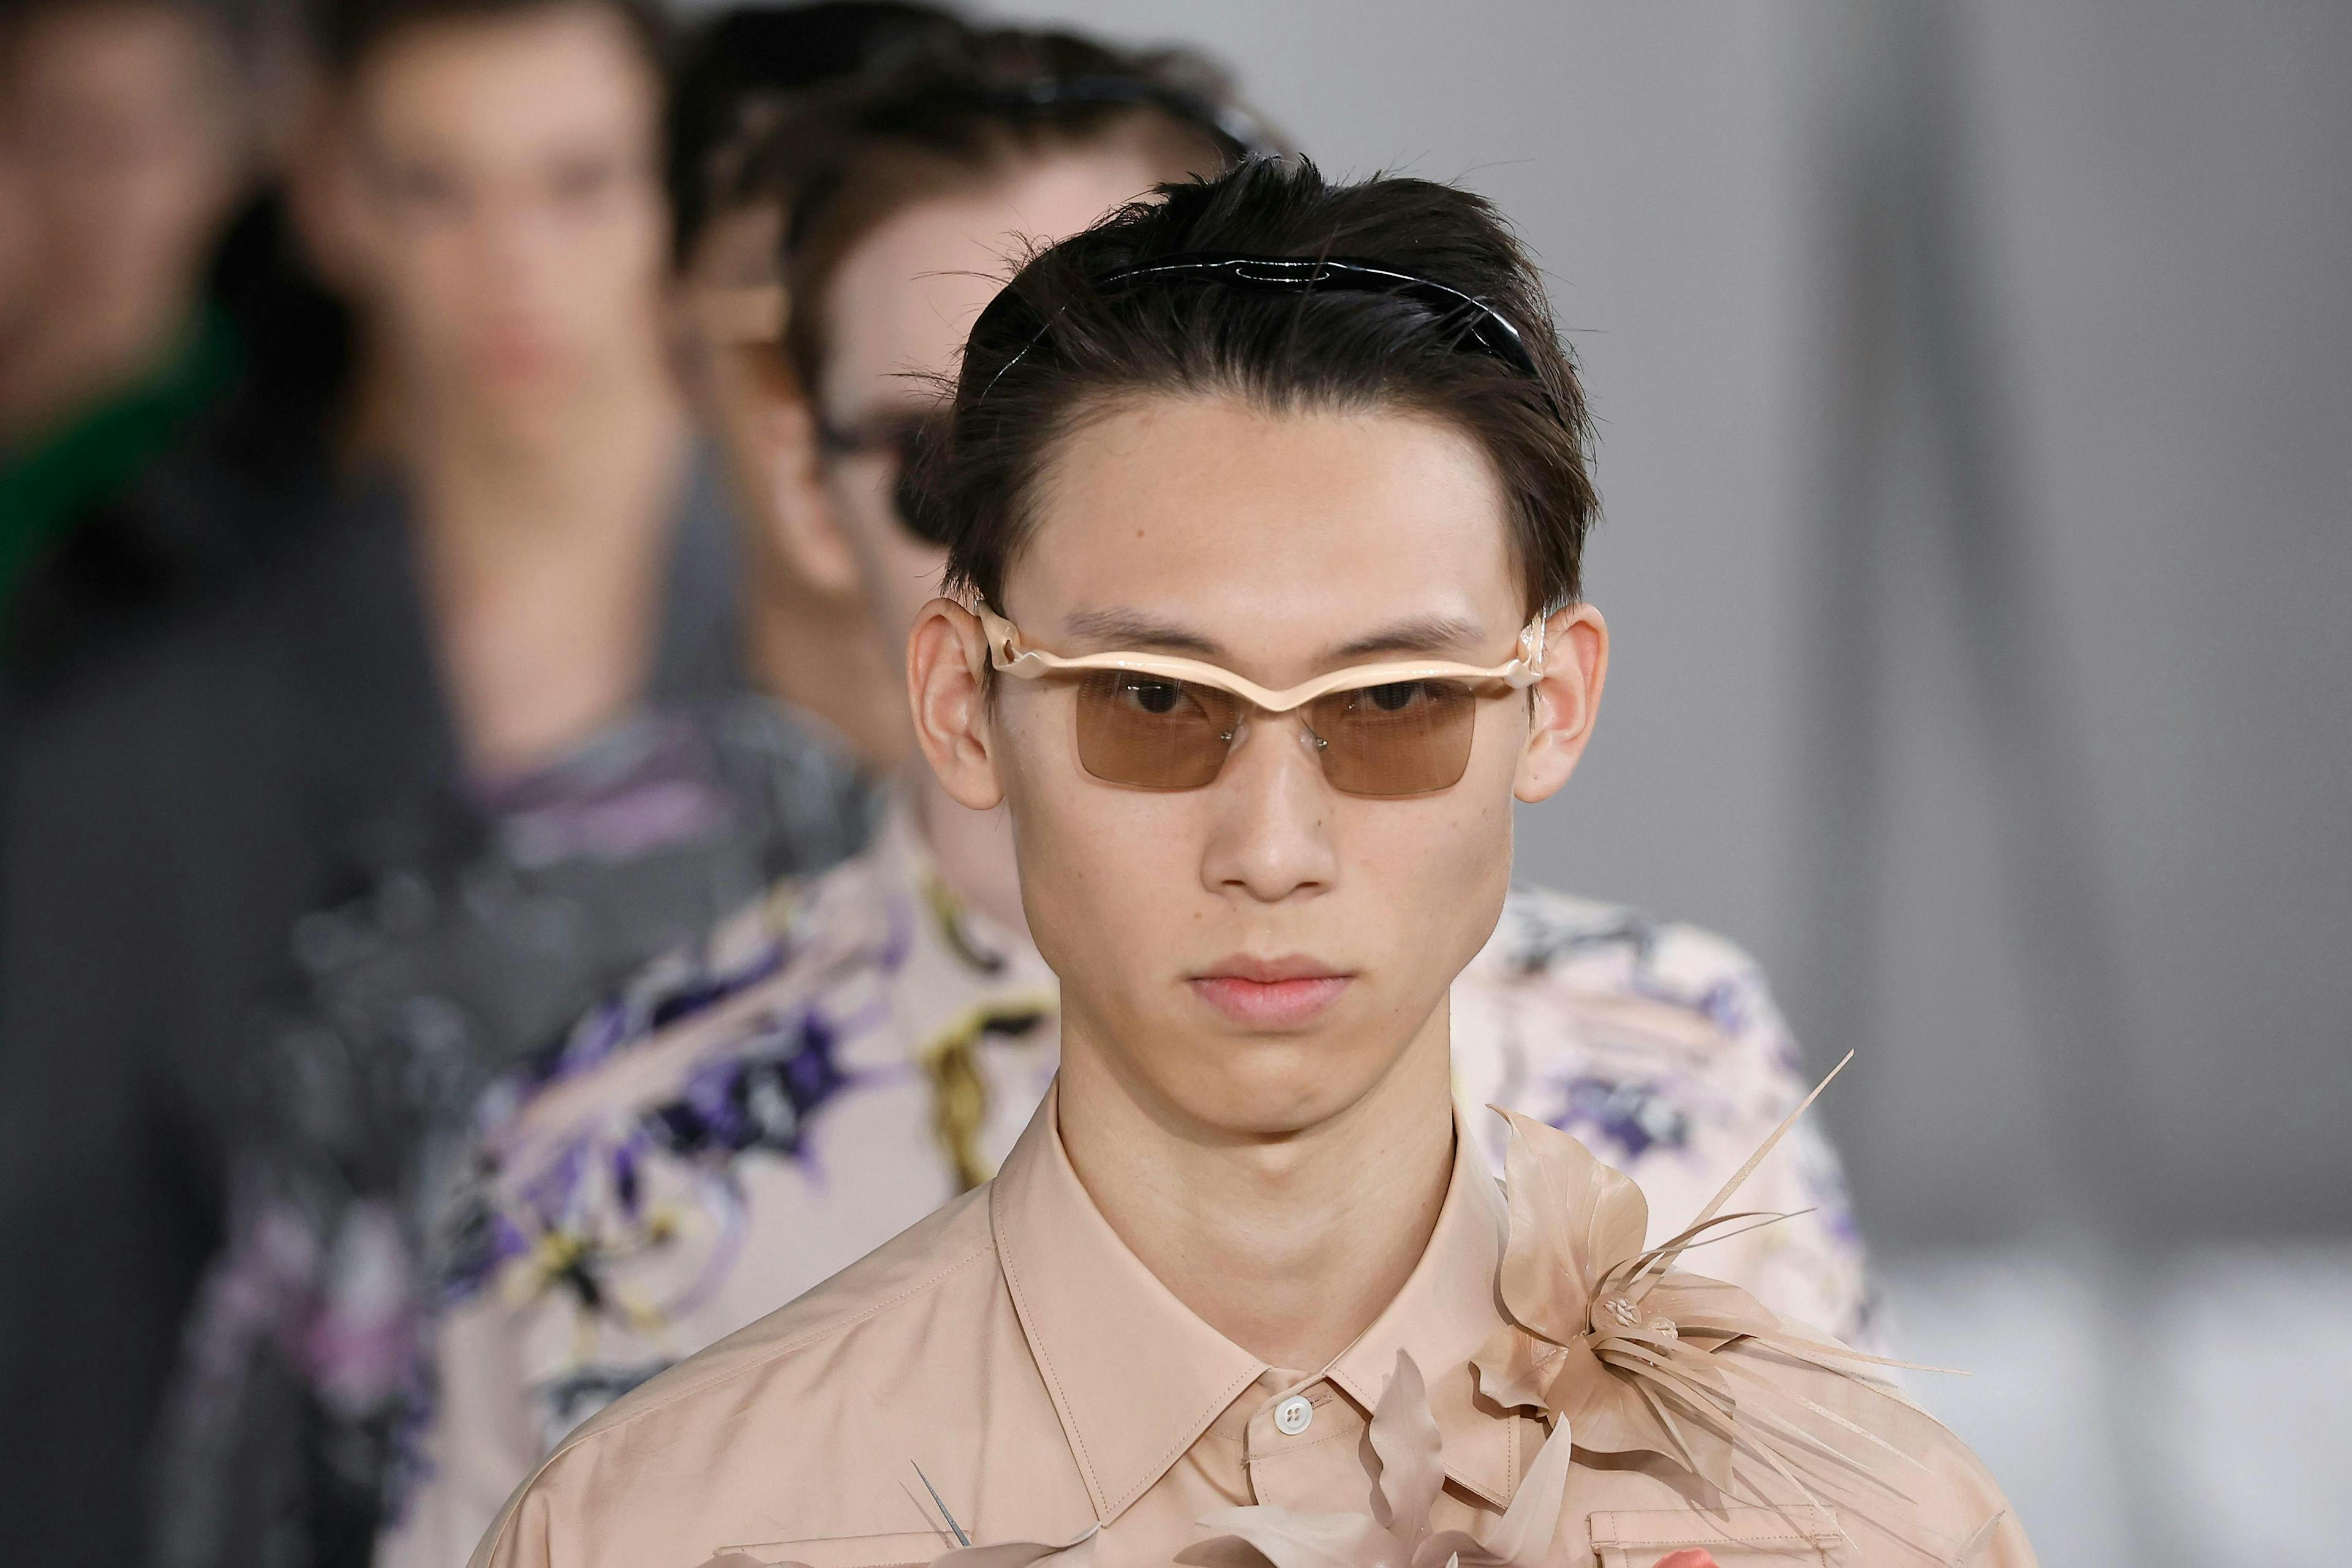 milan fashion accessories sunglasses adult male man person face head